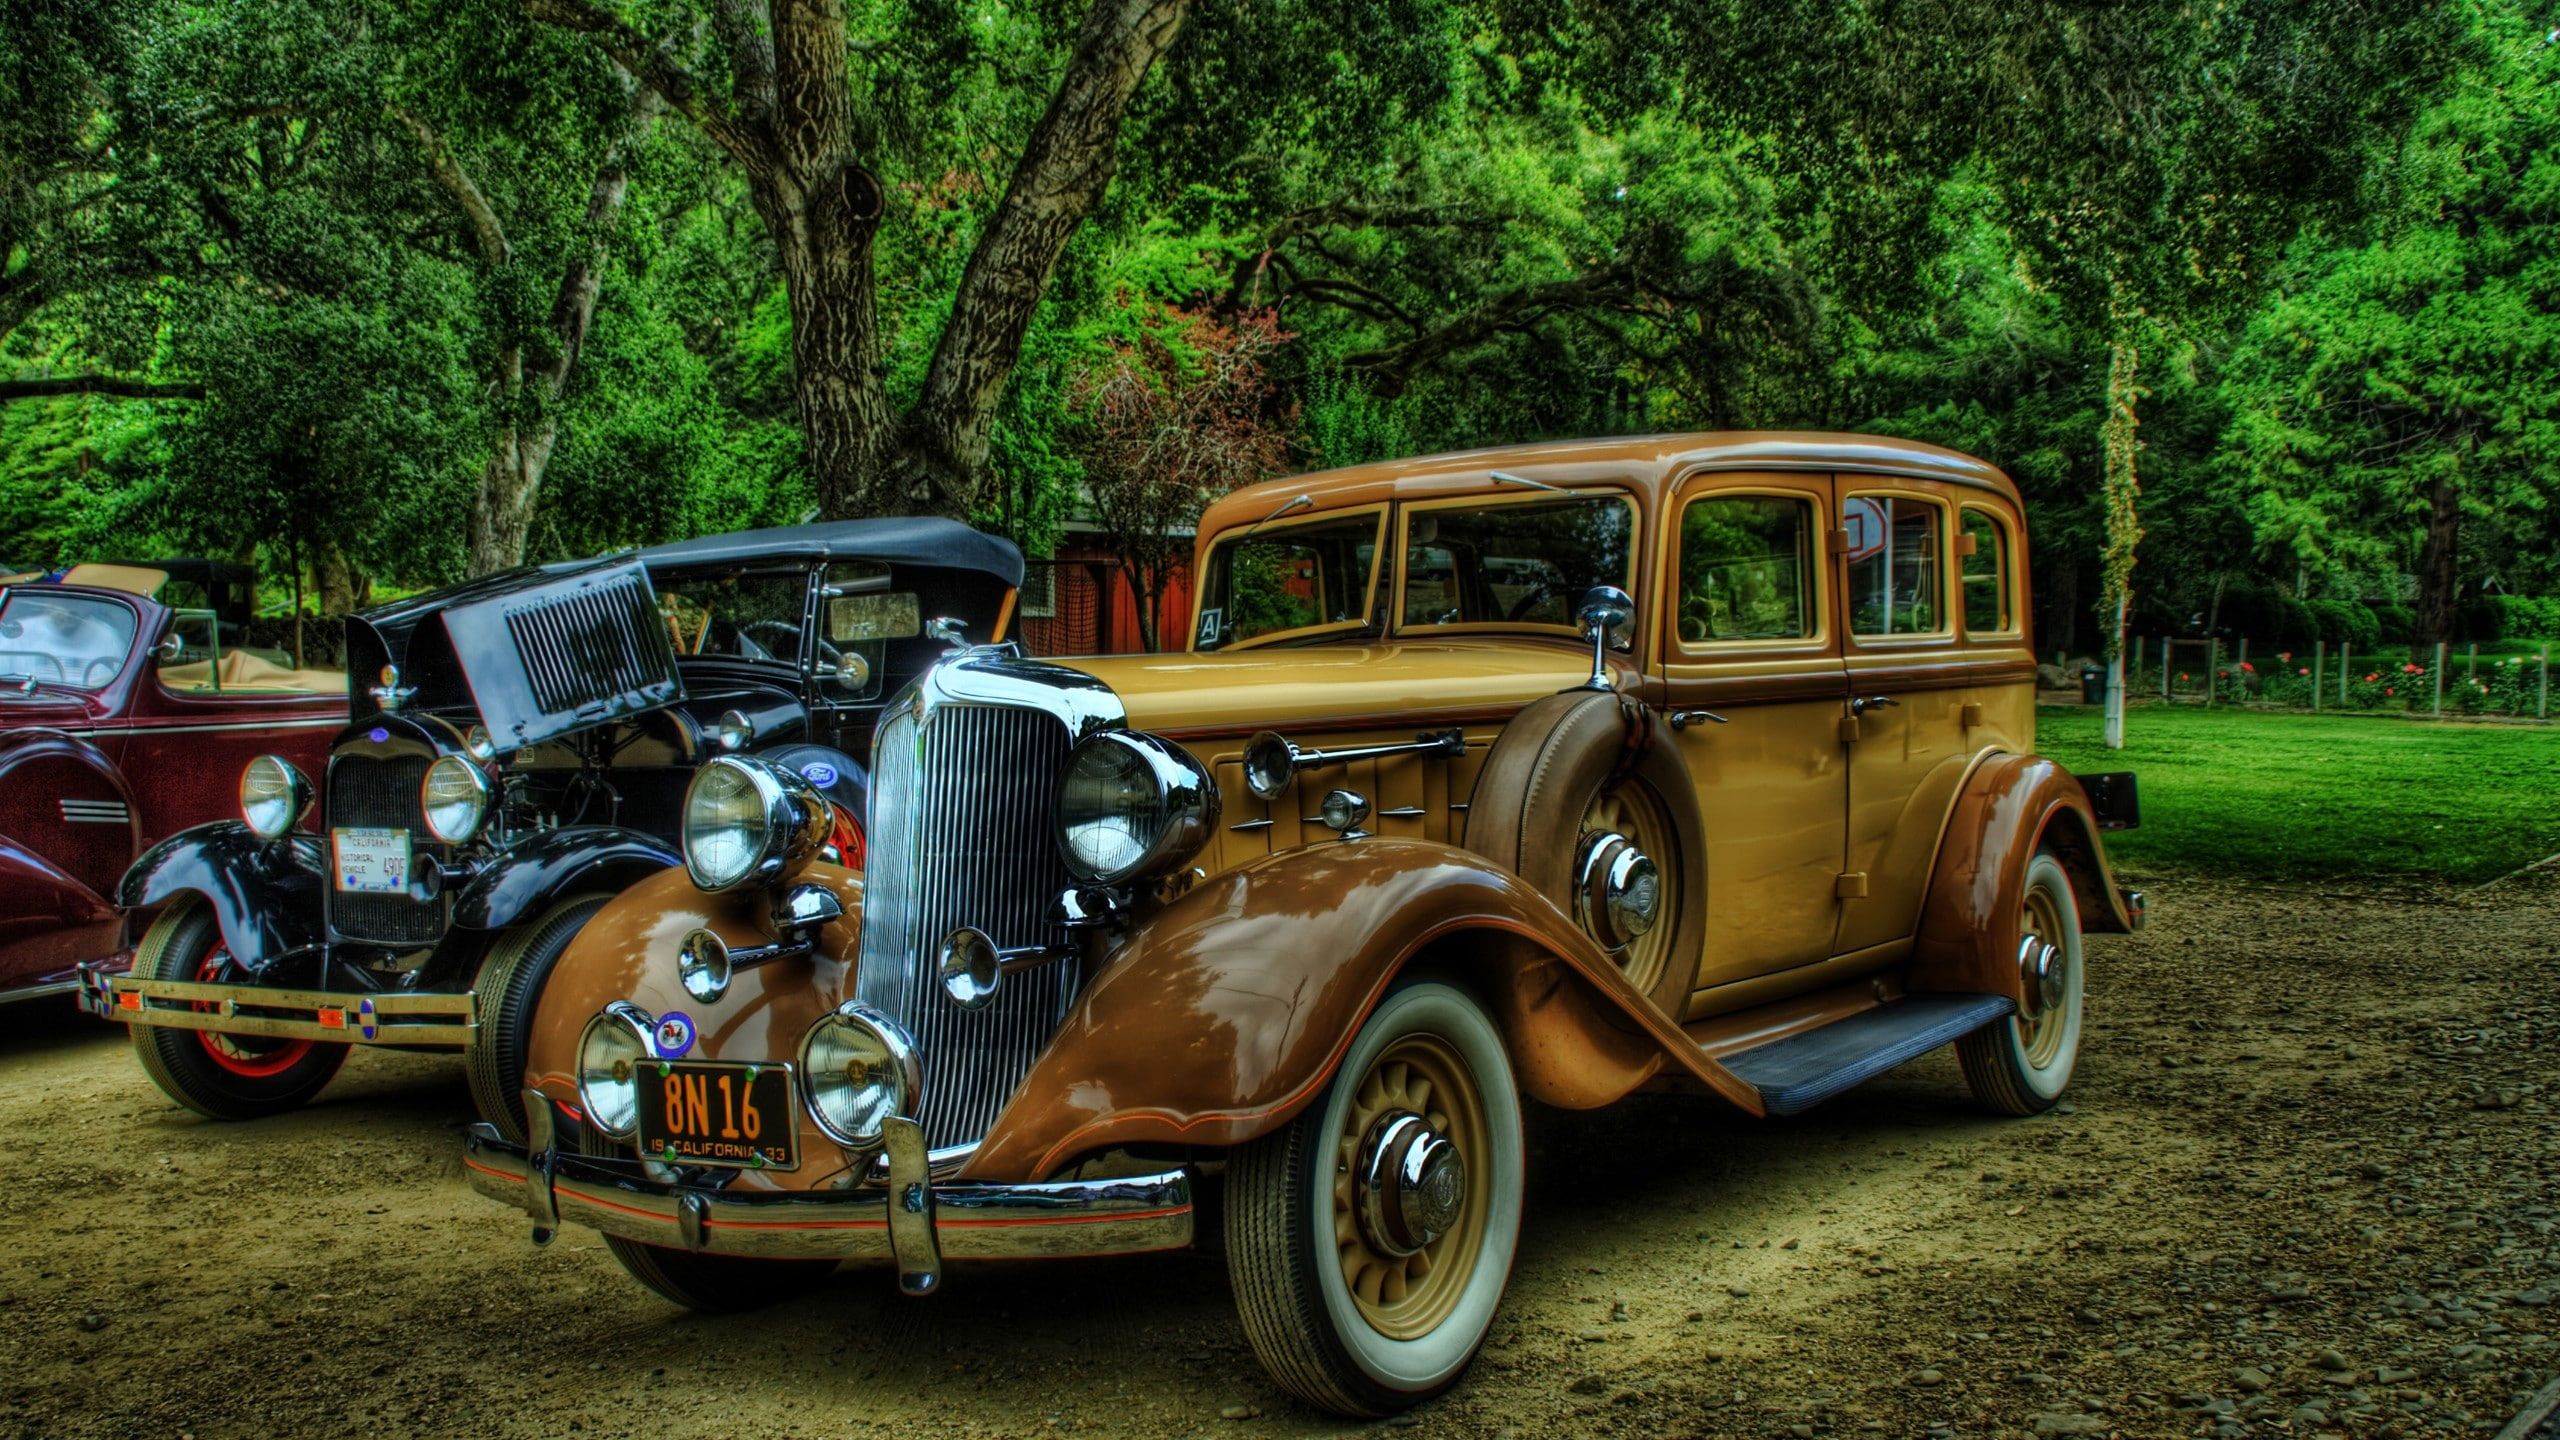 Vintage wallpaper, car, Oldtimer, digital art, vehicle, trees, plants. Classic cars, Old classic cars, Retro cars